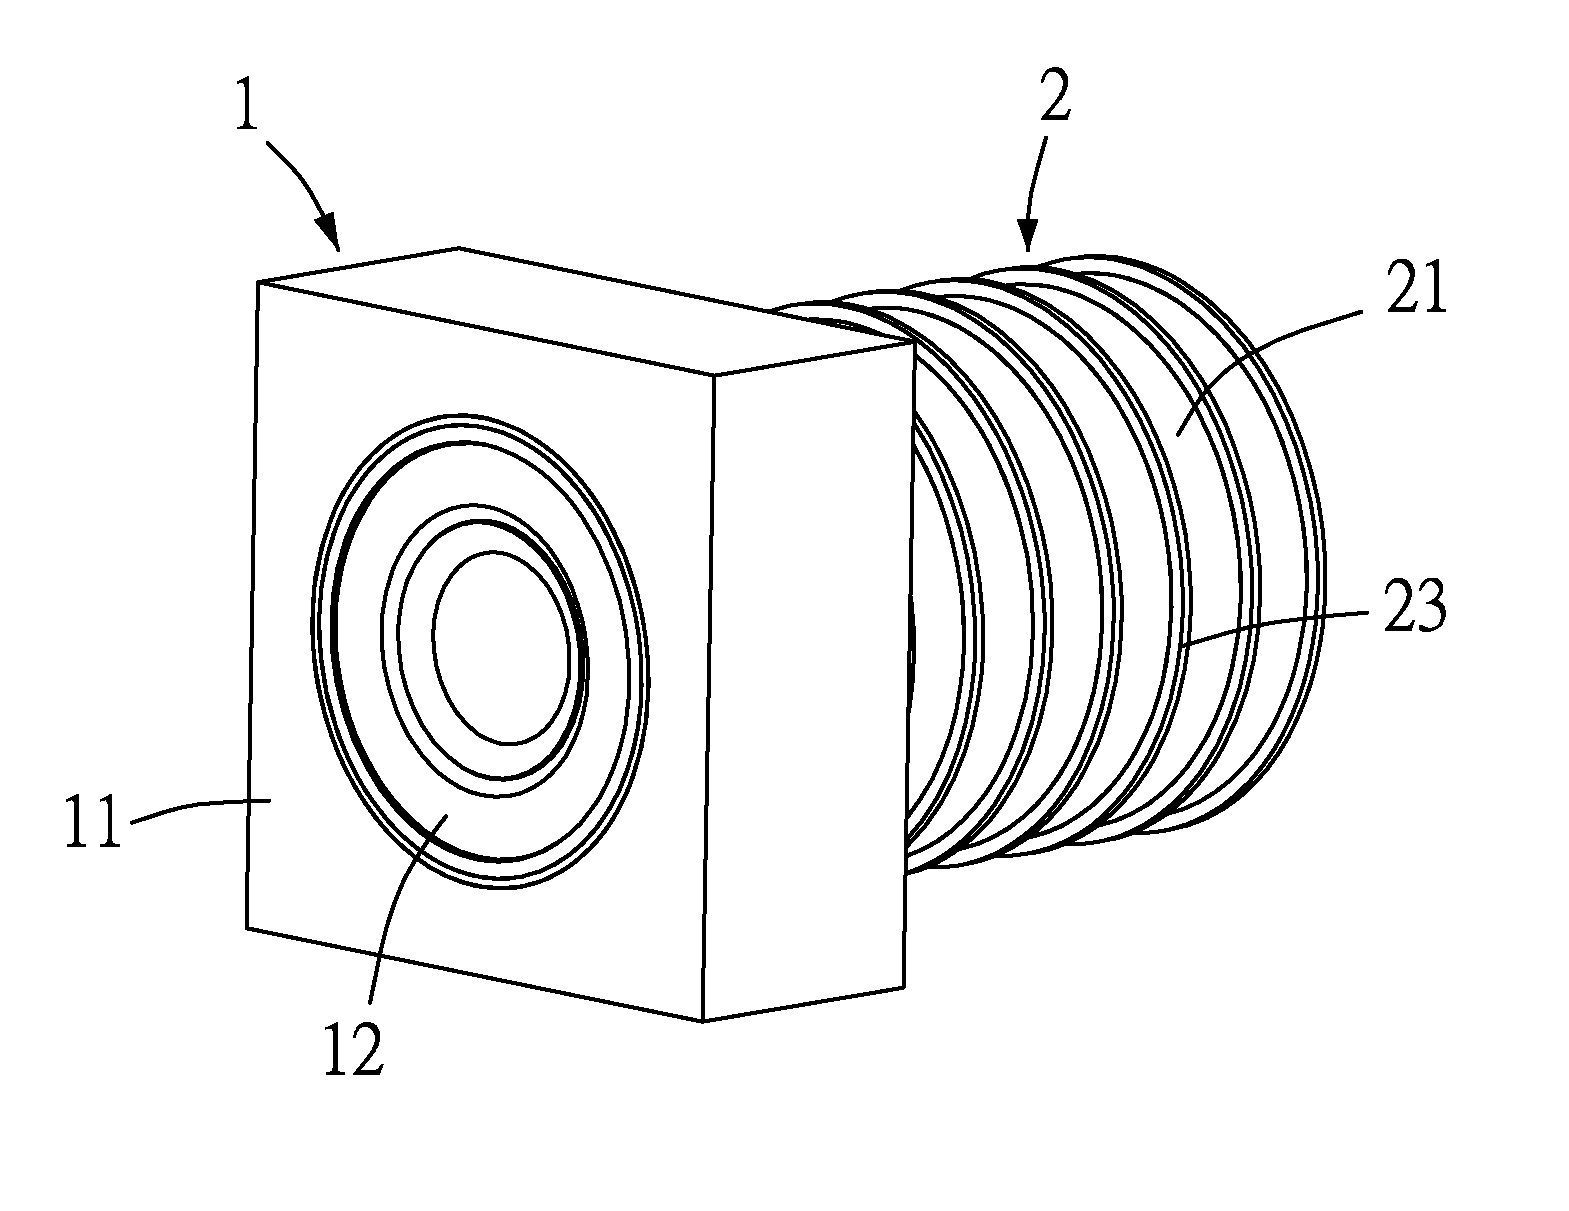 Speaker device